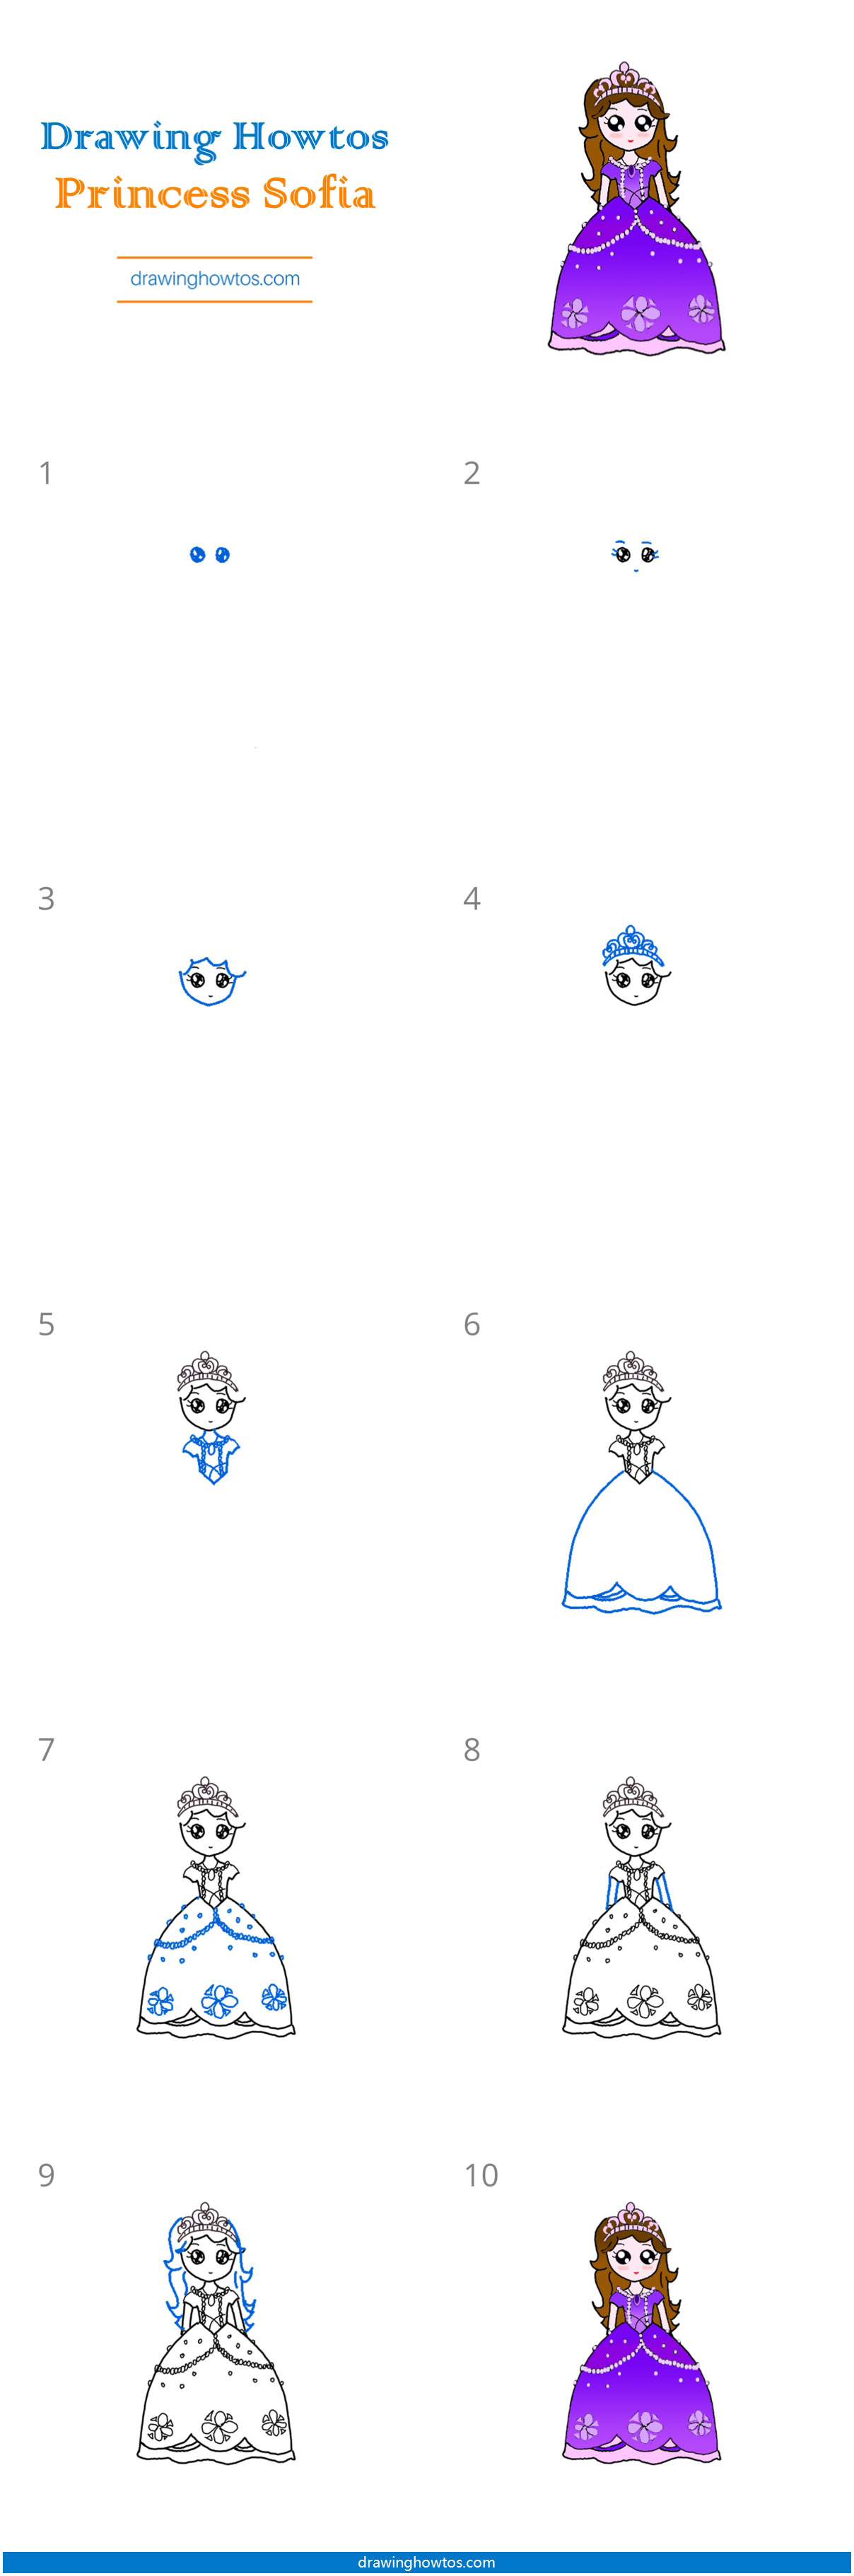 How to Draw Princess Sofia Step by Step